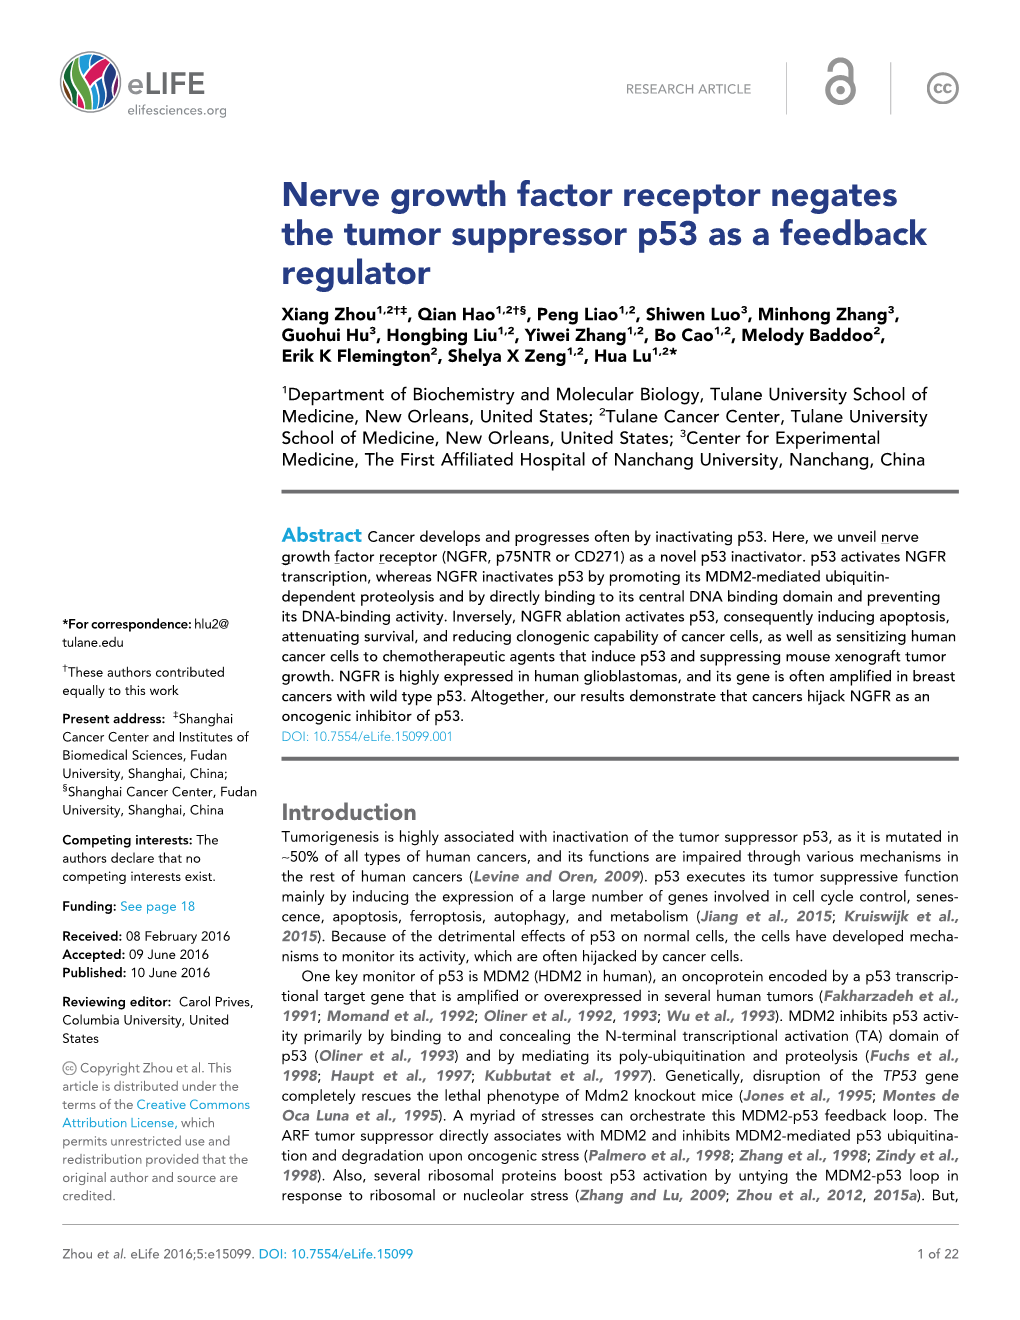 Nerve Growth Factor Receptor Negates the Tumor Suppressor P53 As a Feedback Regulator